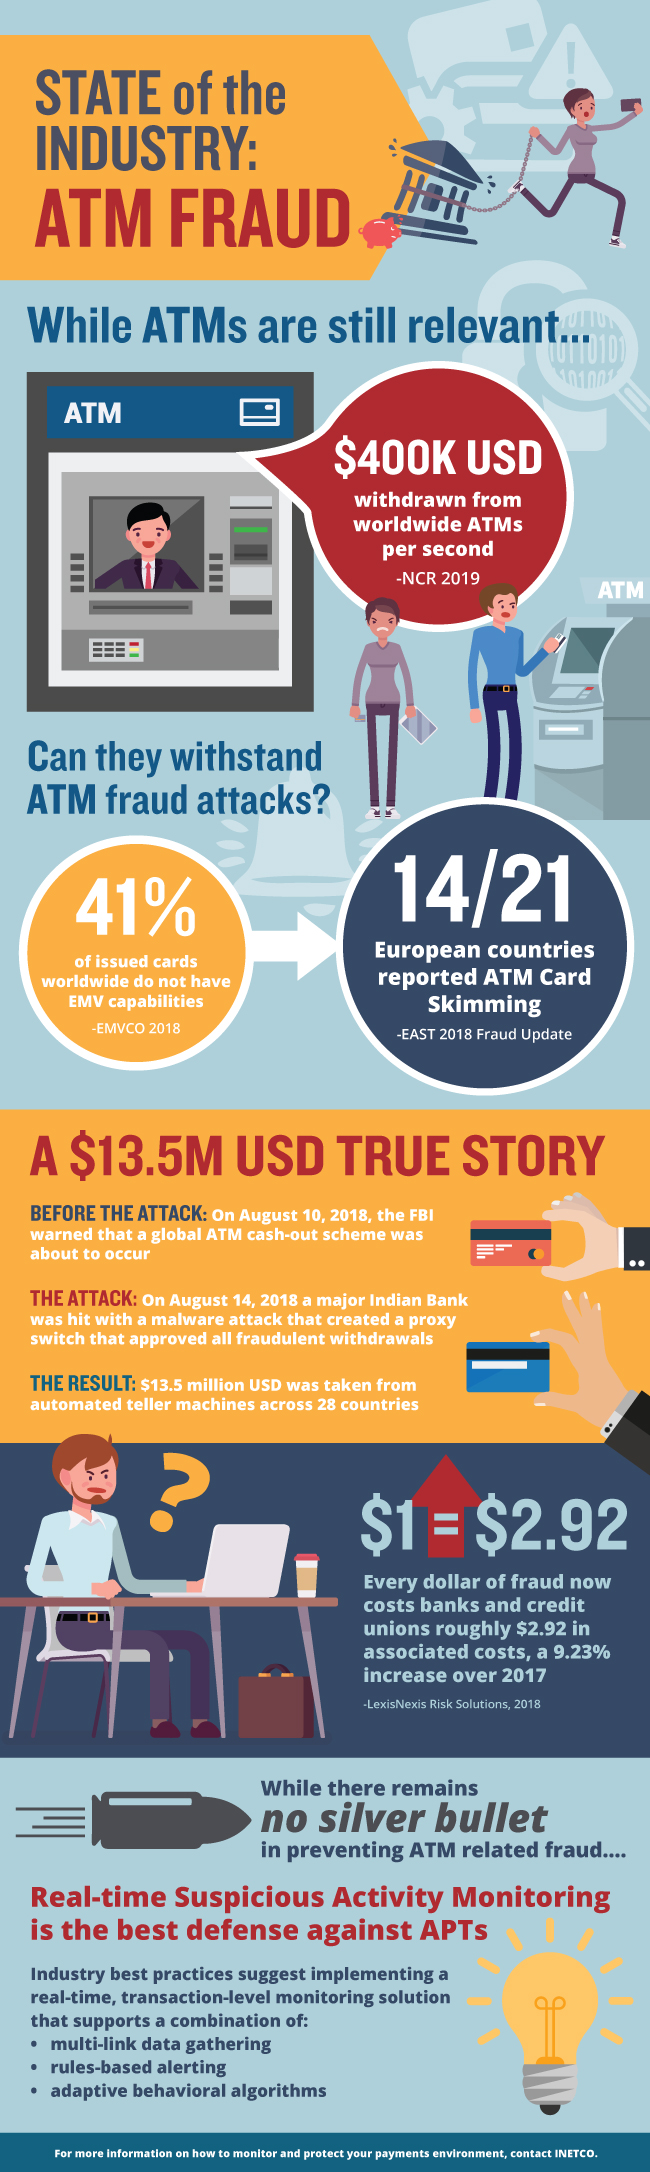 inetco atm fraud infographic 2019